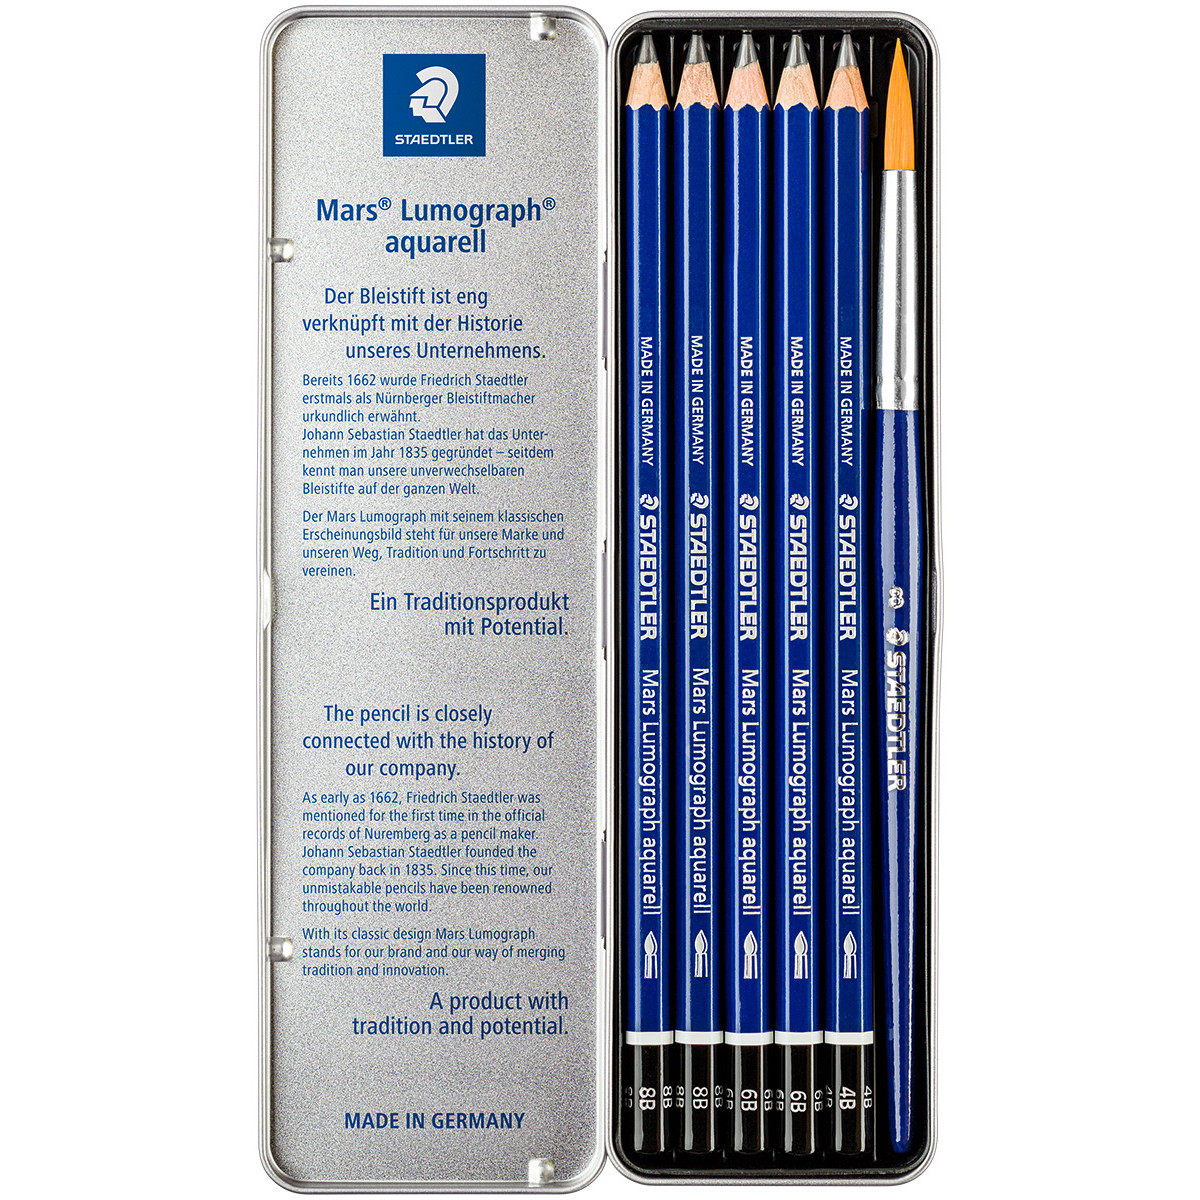 STAEDTLER 100 G6 Pencil 